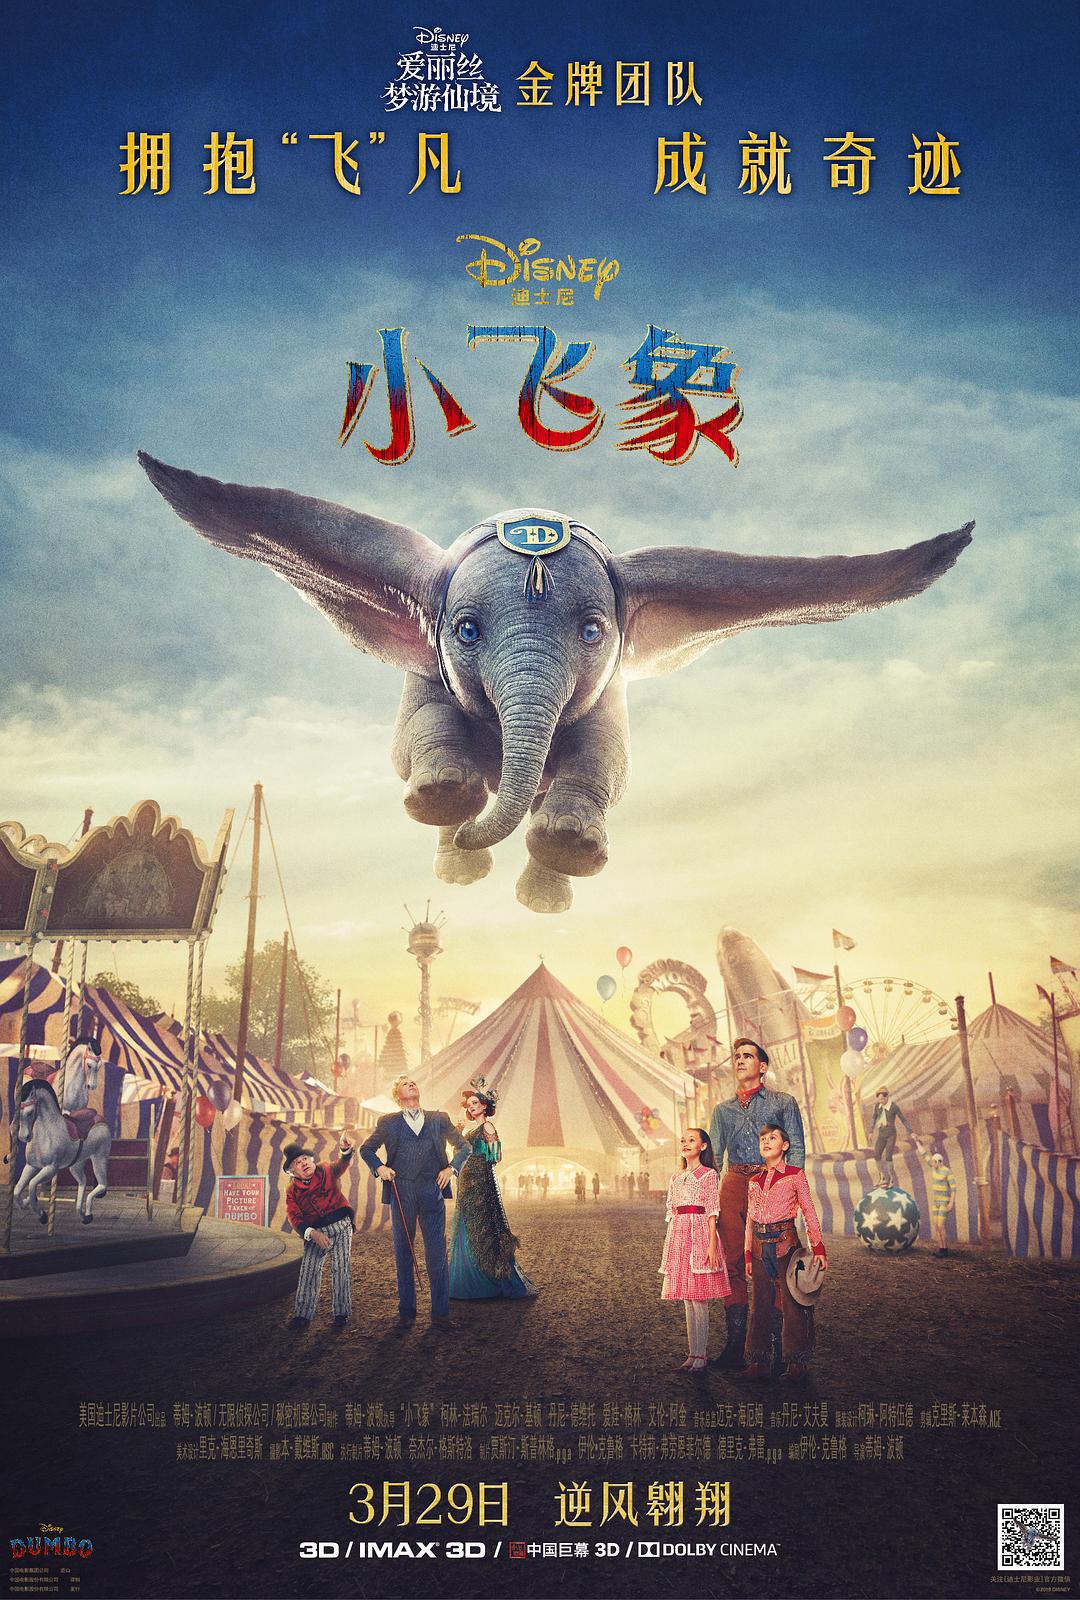 小飞象/小飞象真人版 Dumbo.2019.1080p.BluRay.x264-SPARKS 7.95GB-1.png